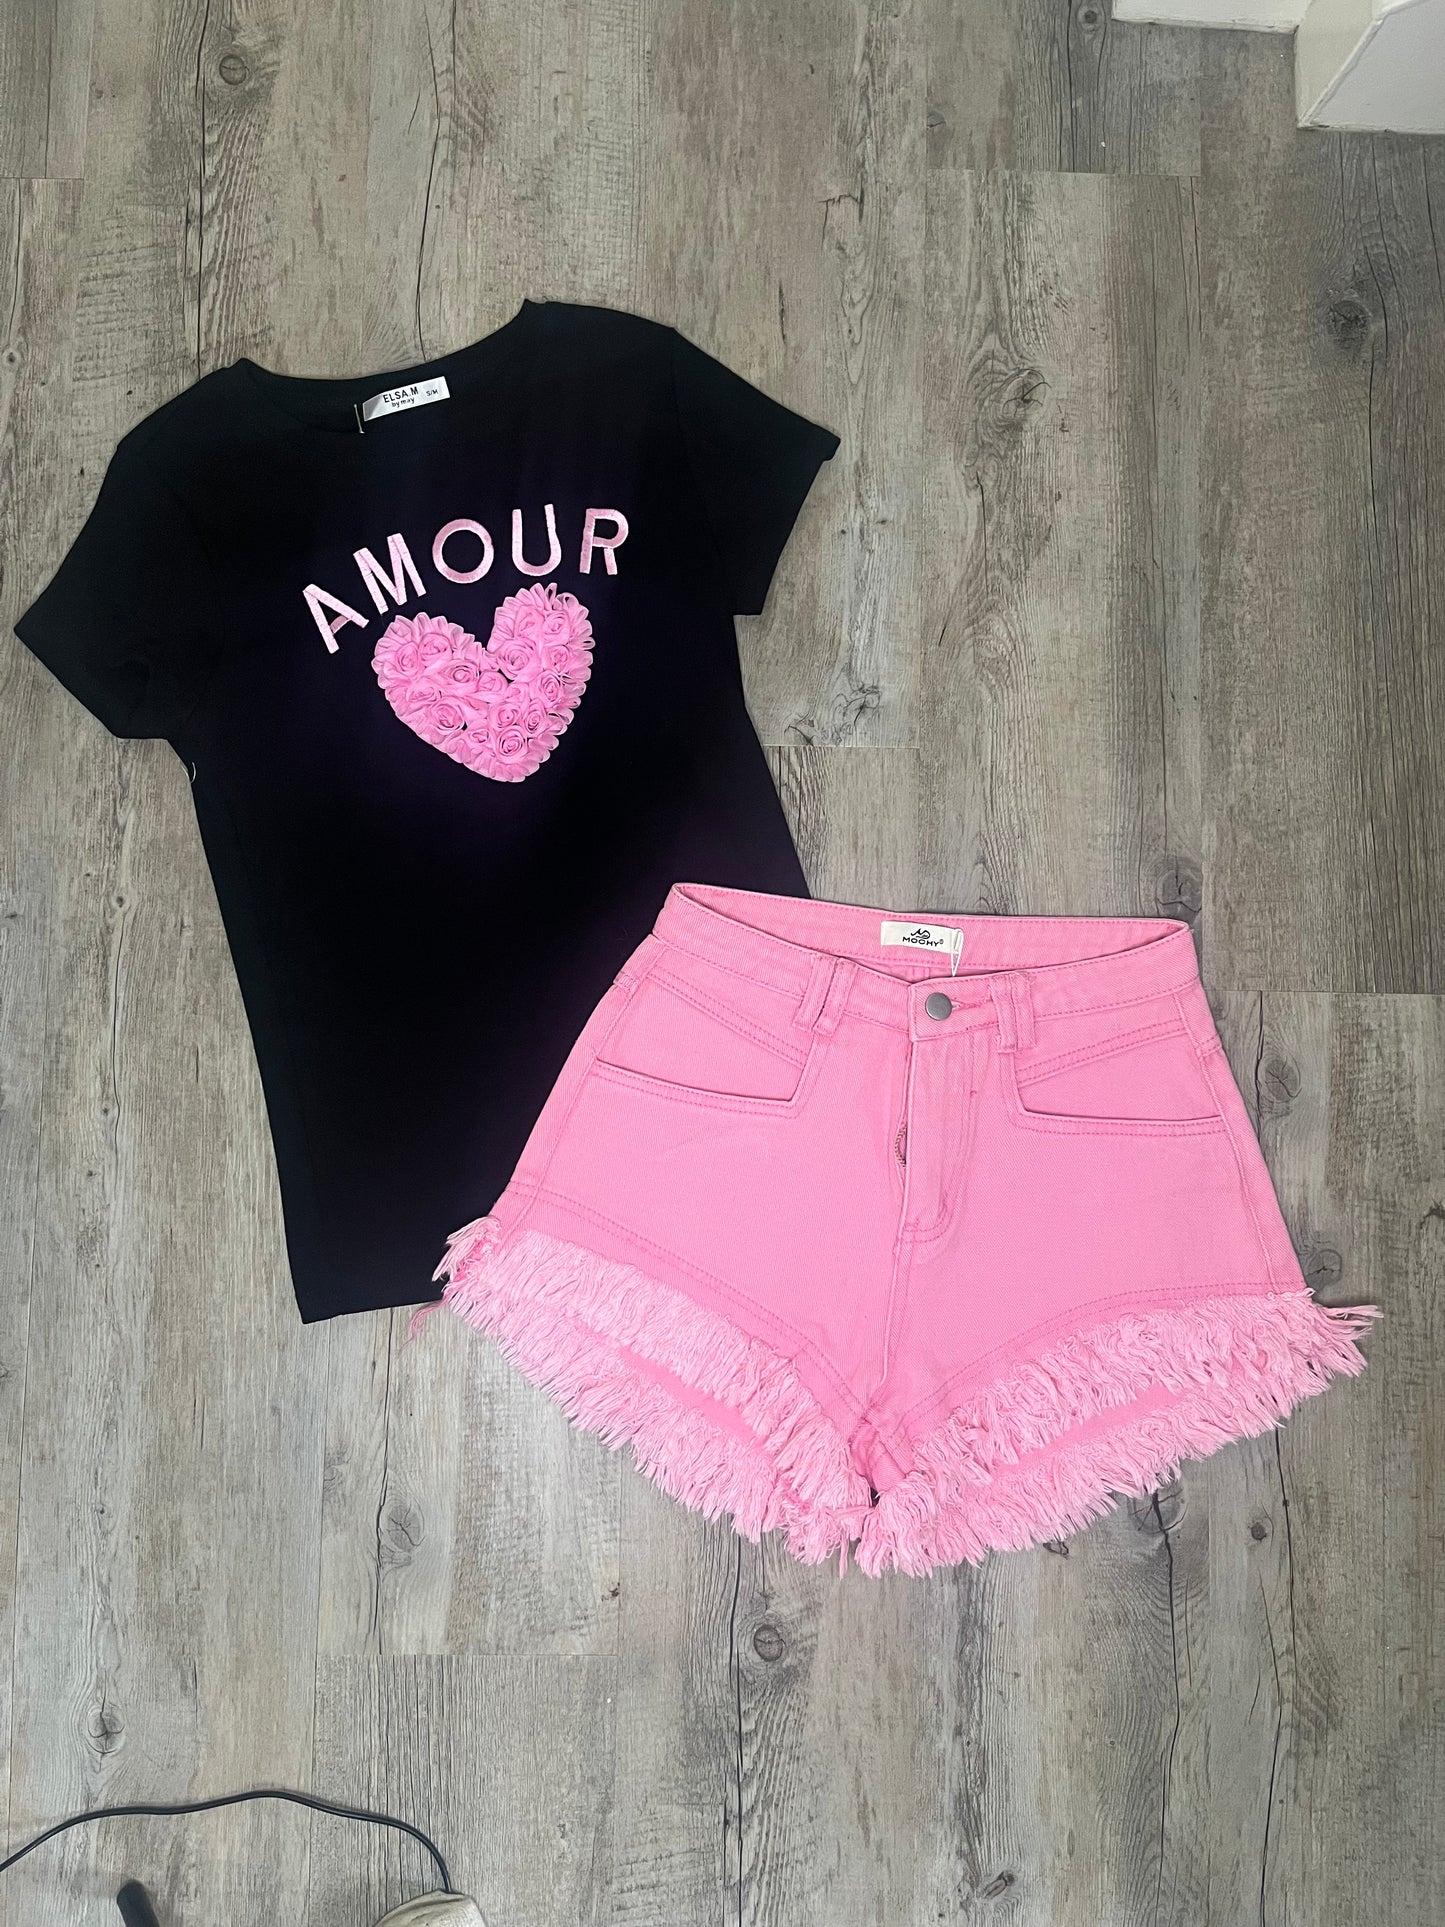 Ladies ‘Amour’ T-Shirt